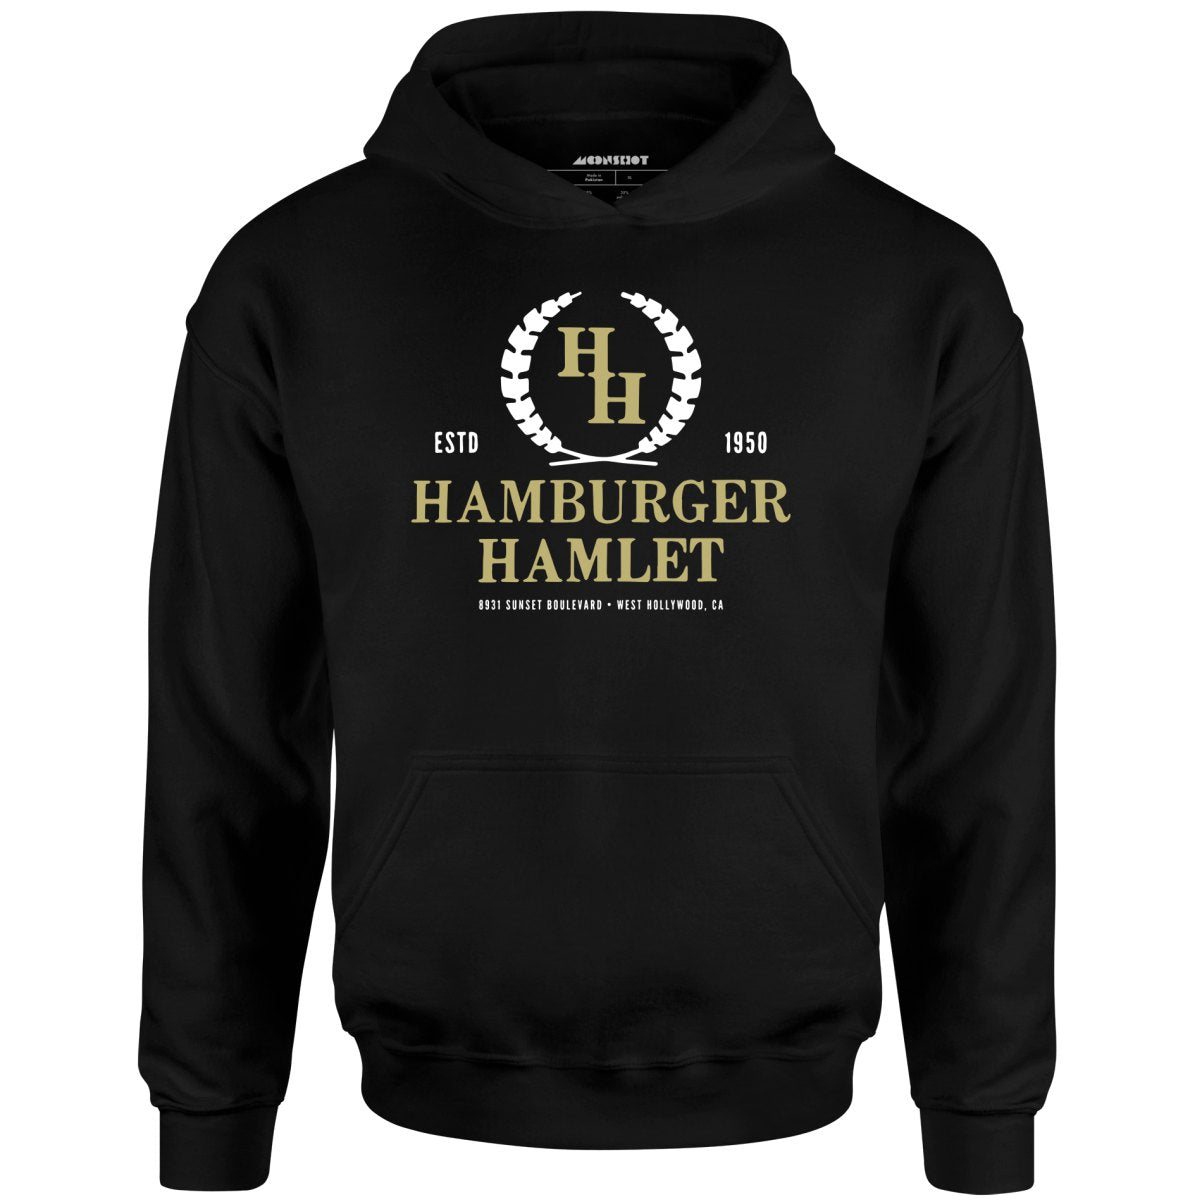 Hamburger Hamlet - West Hollywood, CA - Vintage Restaurant - Unisex Hoodie